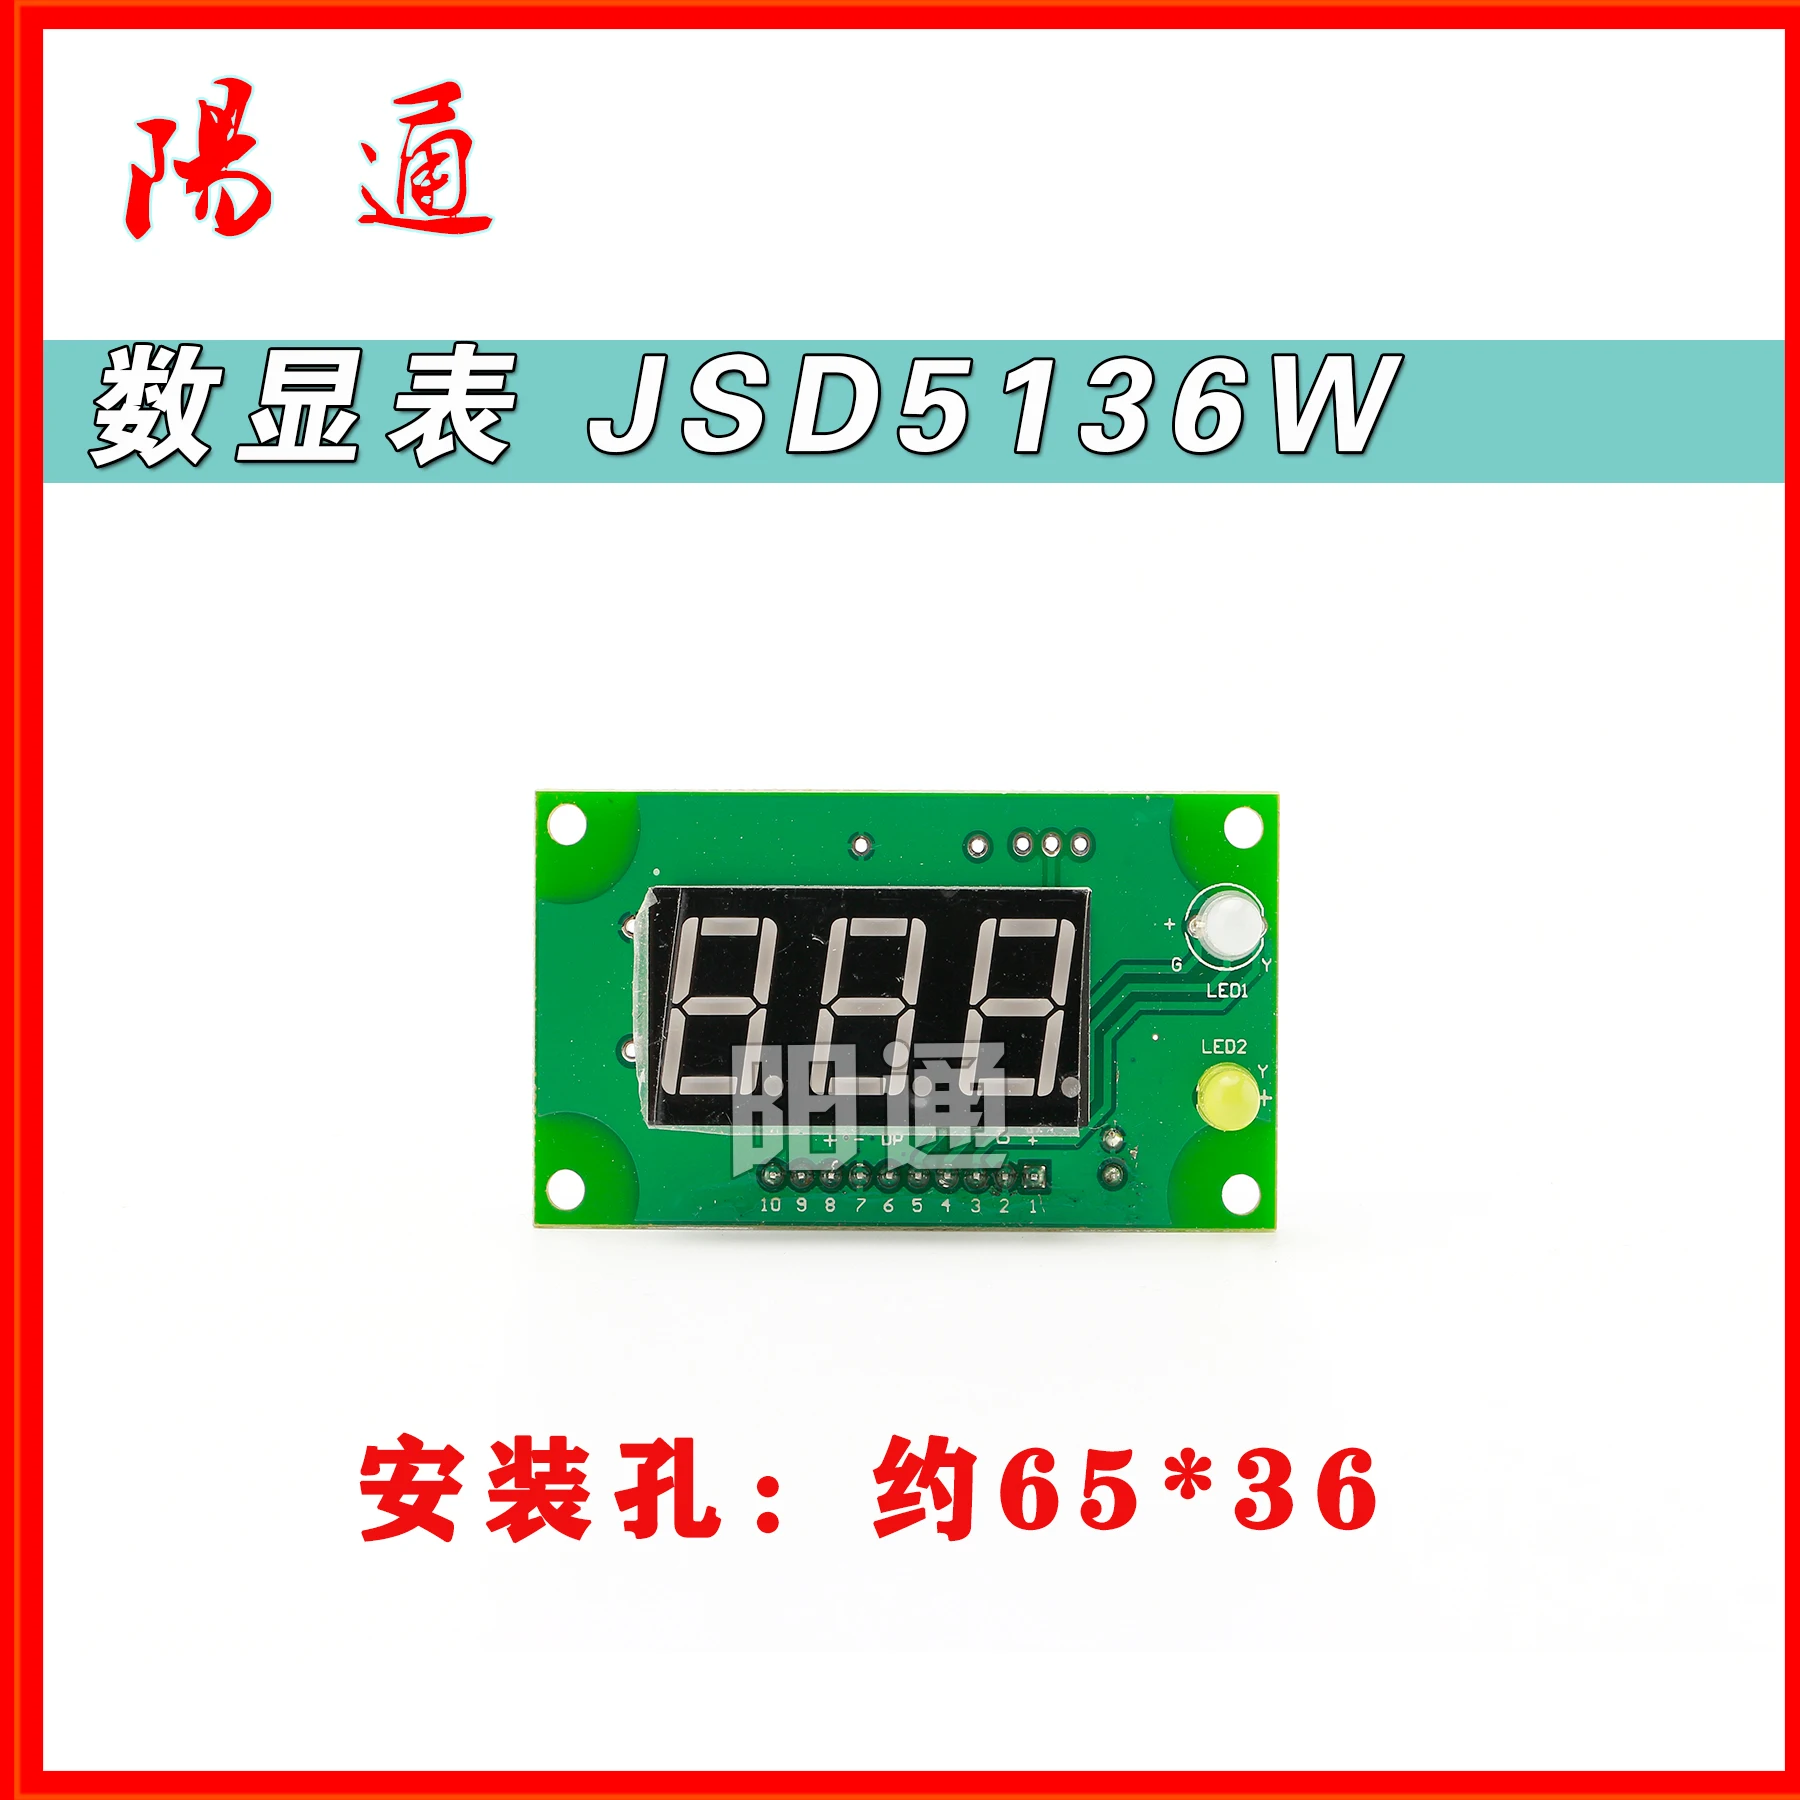 

JSD5136W Welding Machine Digital Display Meter Inverter Welding Machine Digital Display Table with Indicator Light